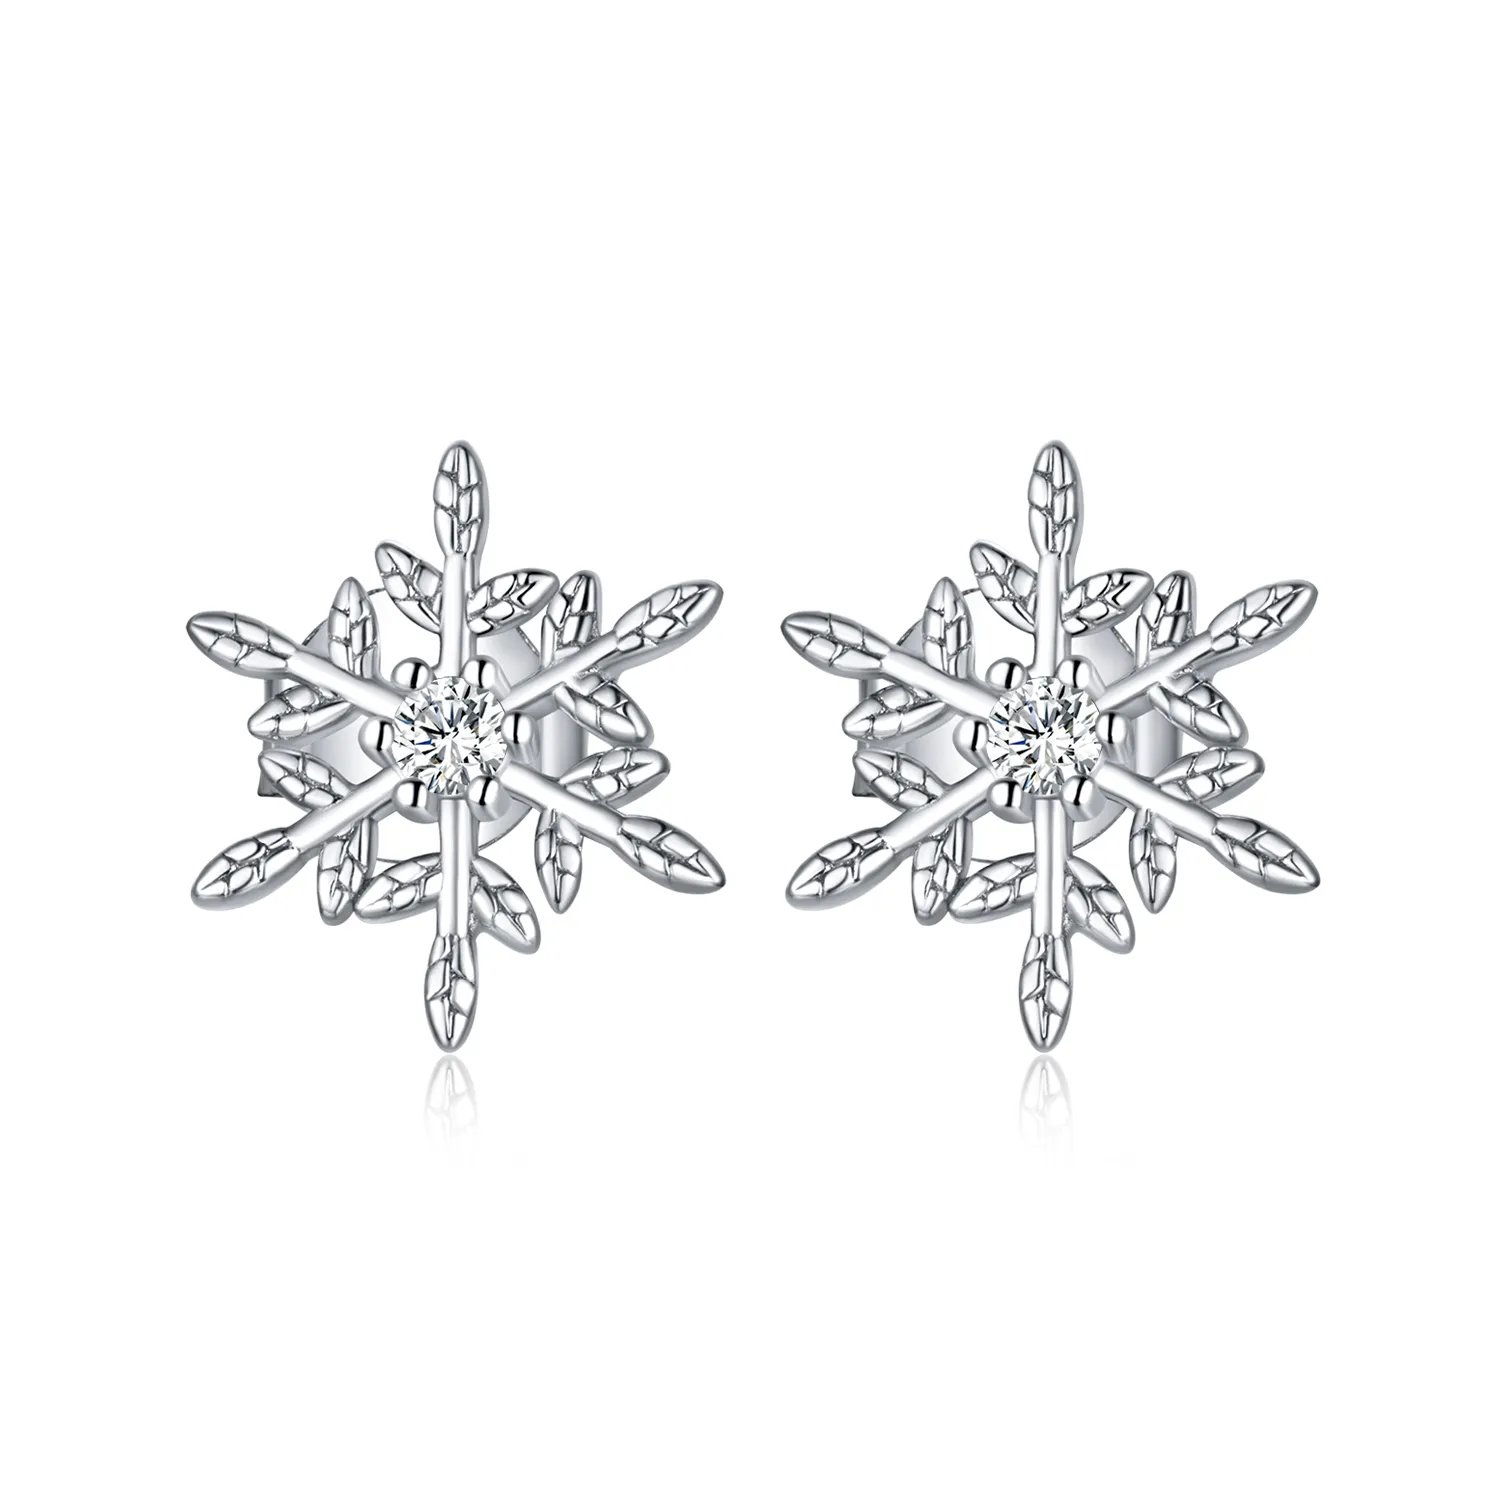 Pandora Style Silver Romantic Snowflakes Stud Earrings - BSE424